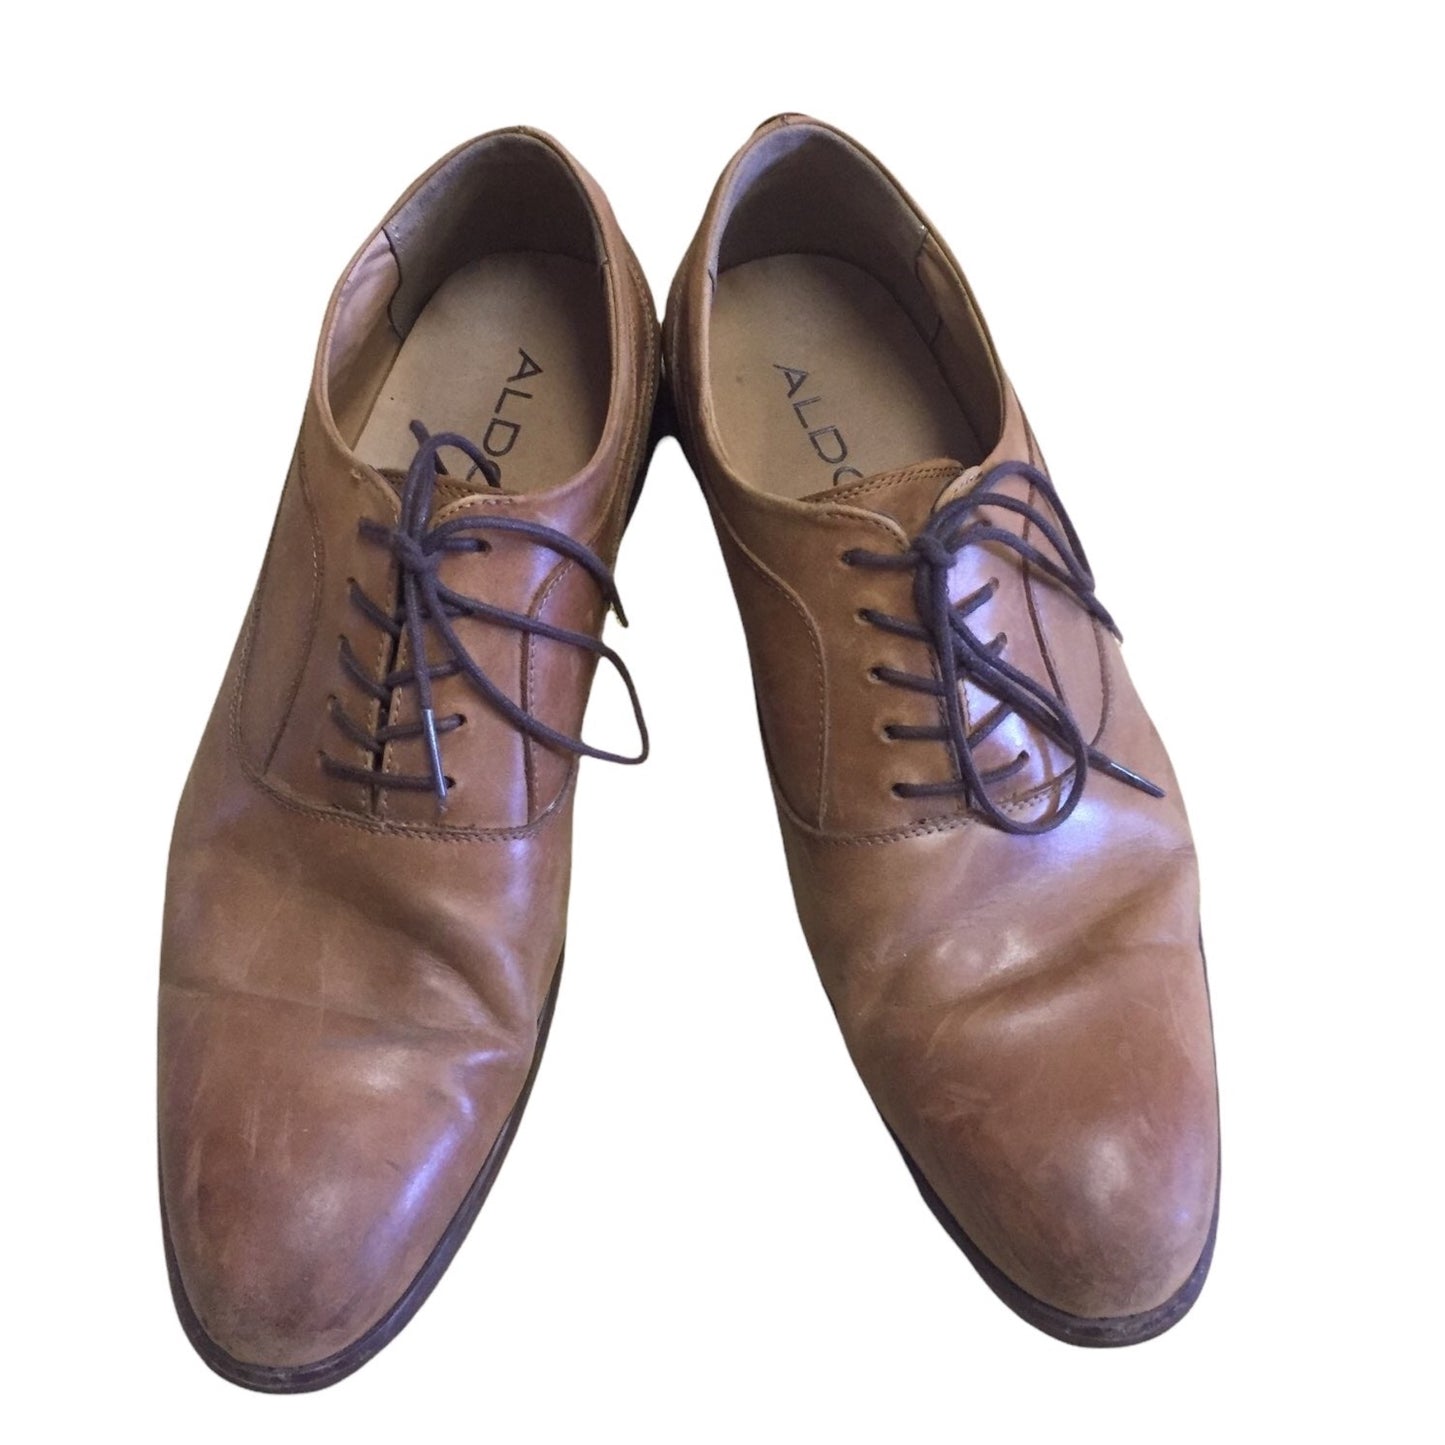 Aldo Light Brown Leather Dress Shoes Size 9 1/2